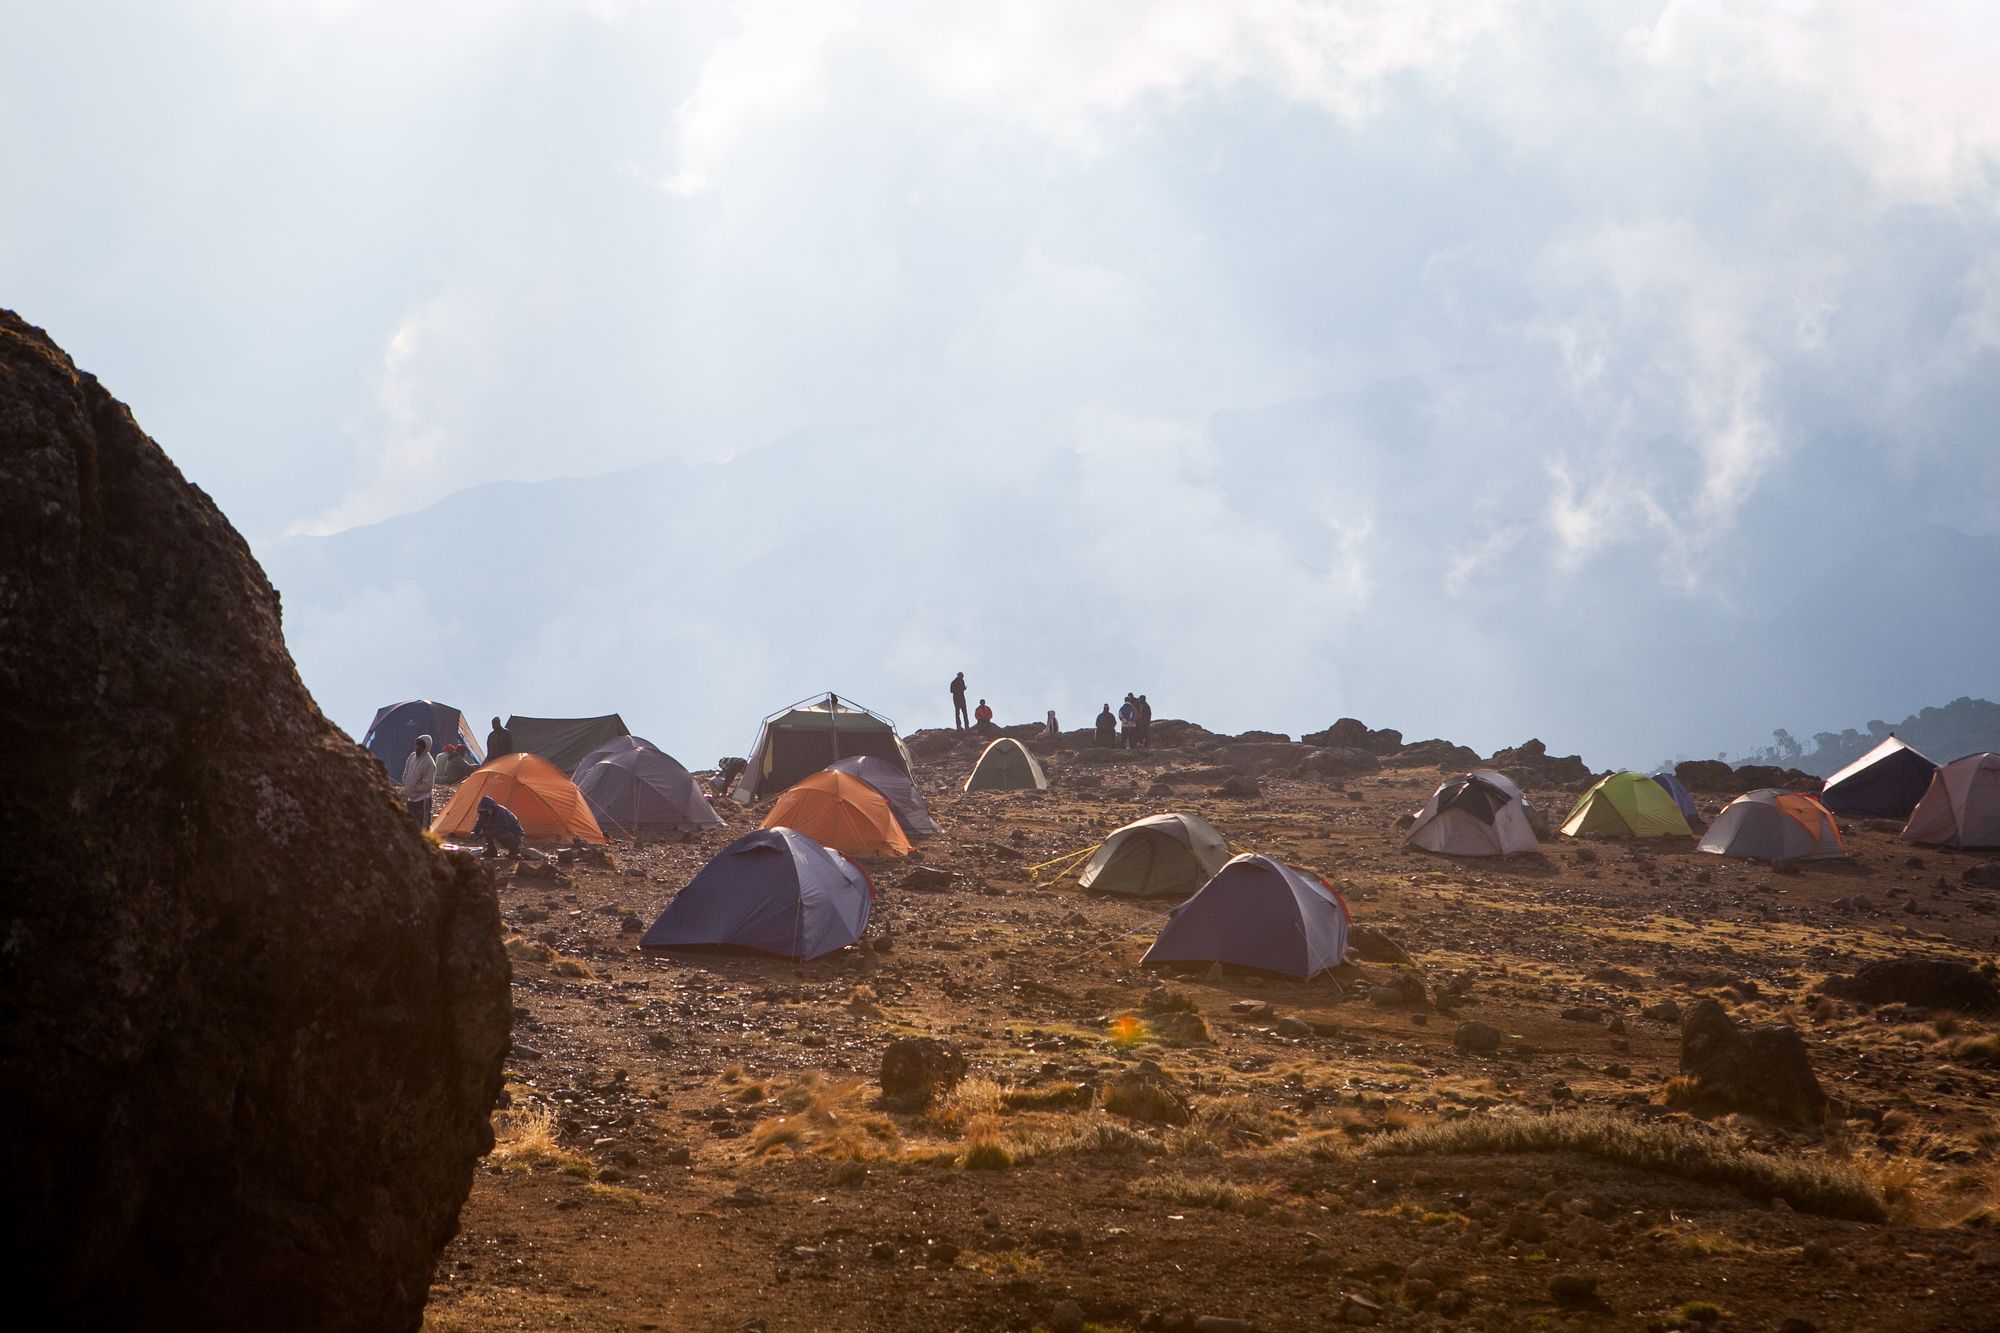 Shira Camp, on Kilimanjaro, at around 3,500m elevation.